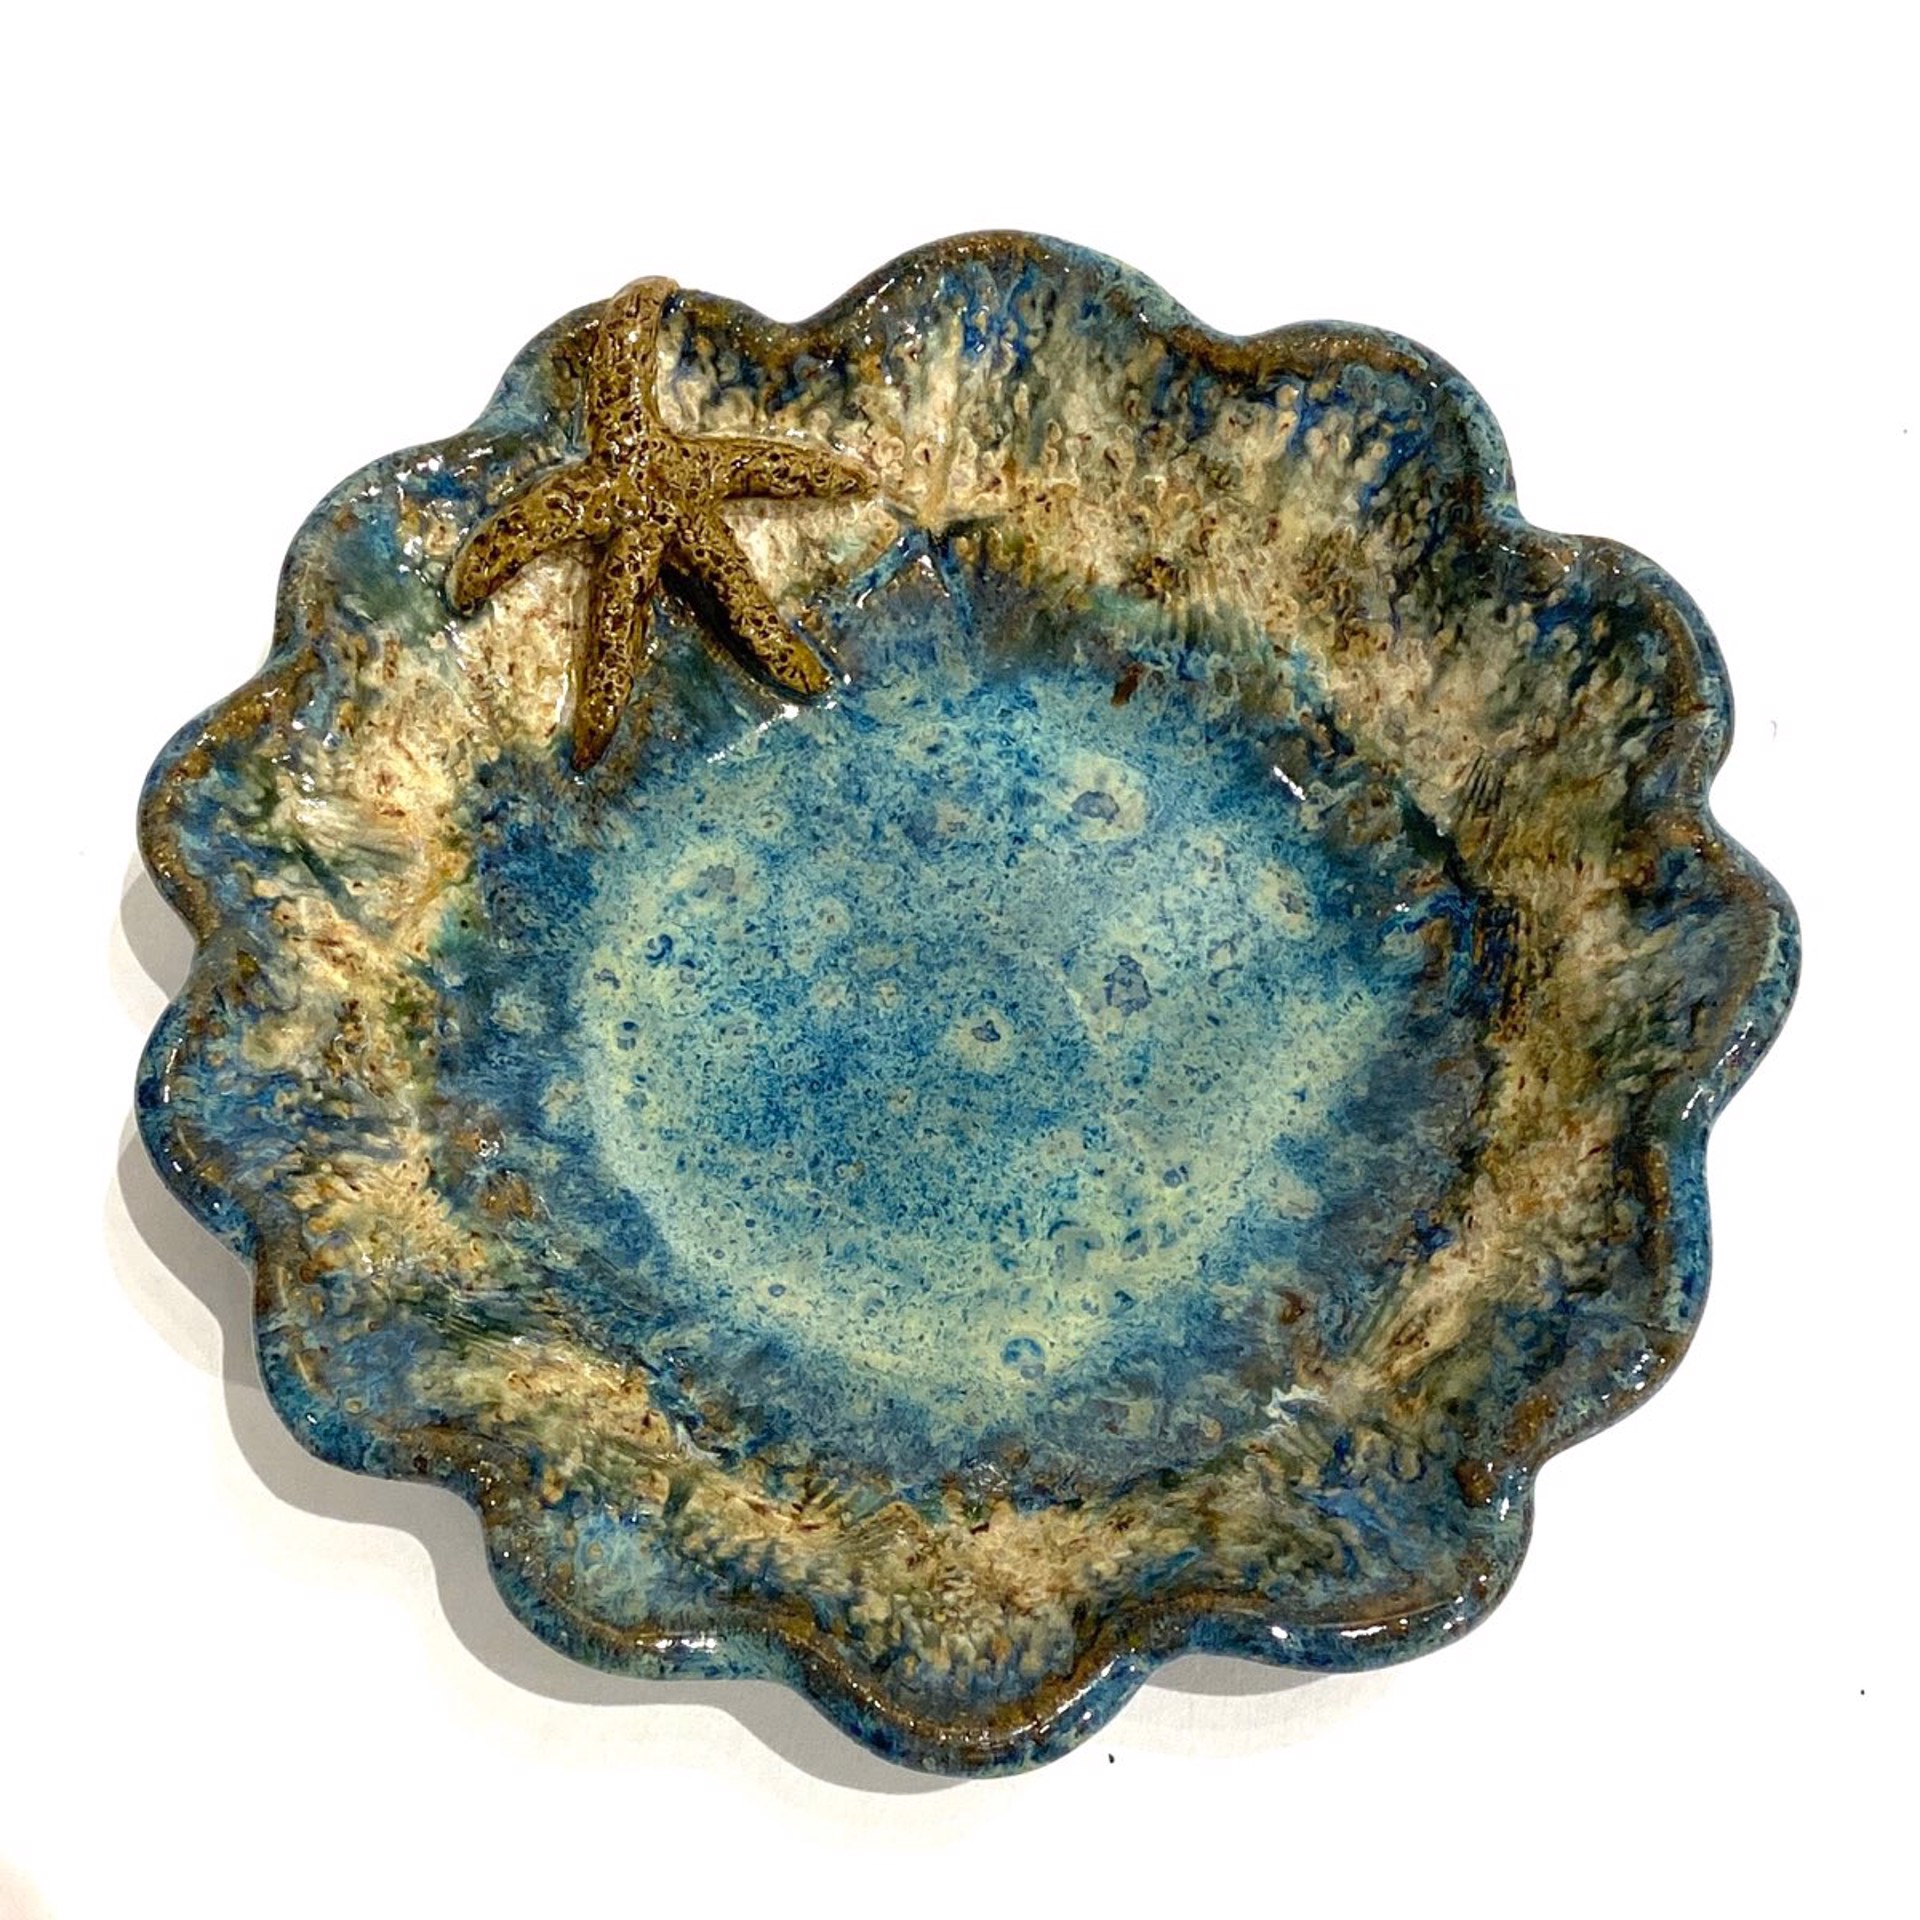 LG23-1007 Small Round Scalloped Bowl with Starfish (Blue Glaze) by Jim & Steffi Logan